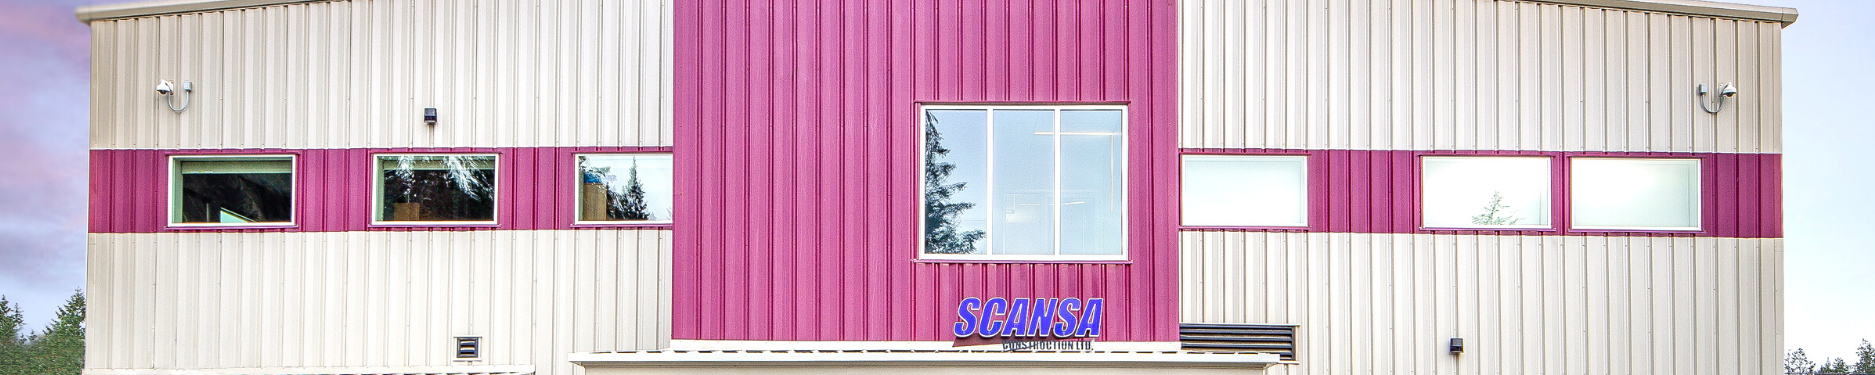 Scansa Construction Ltd.